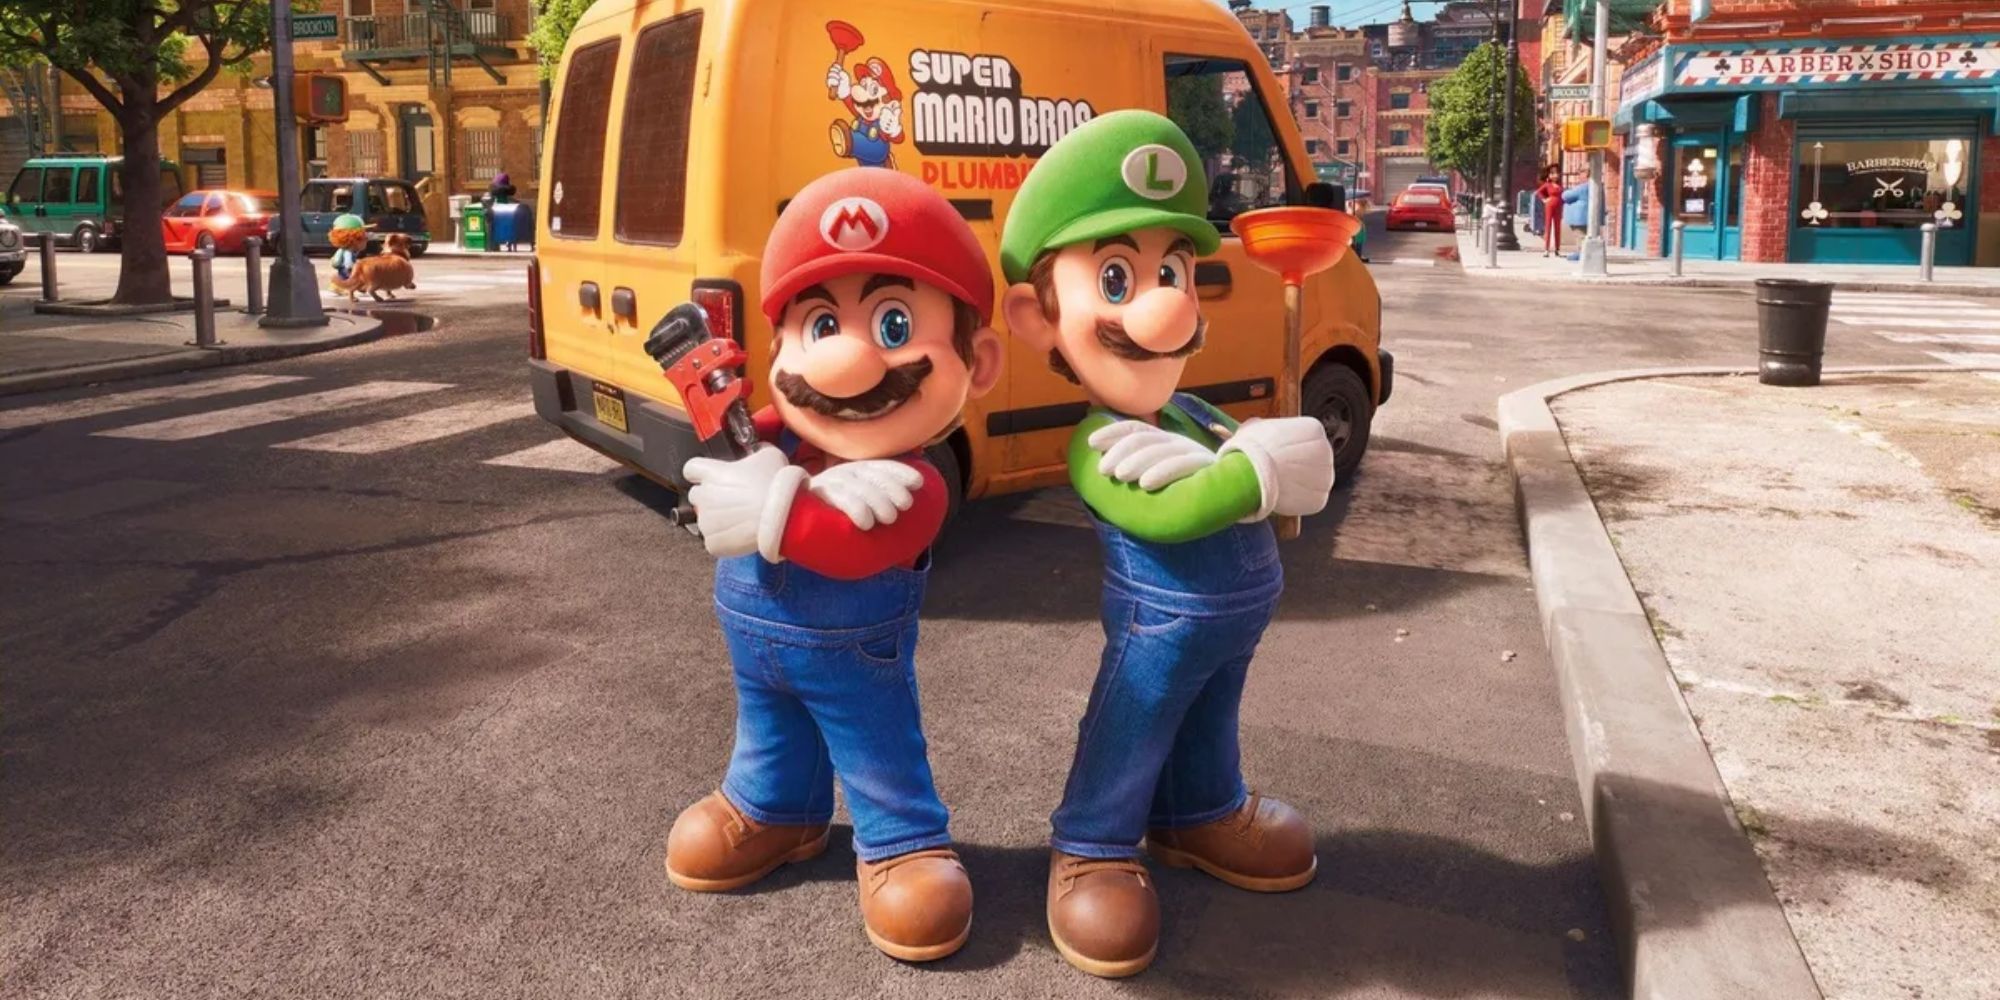 Mario and Luigi standing in front of their van in the Super Mario Bros. Movie